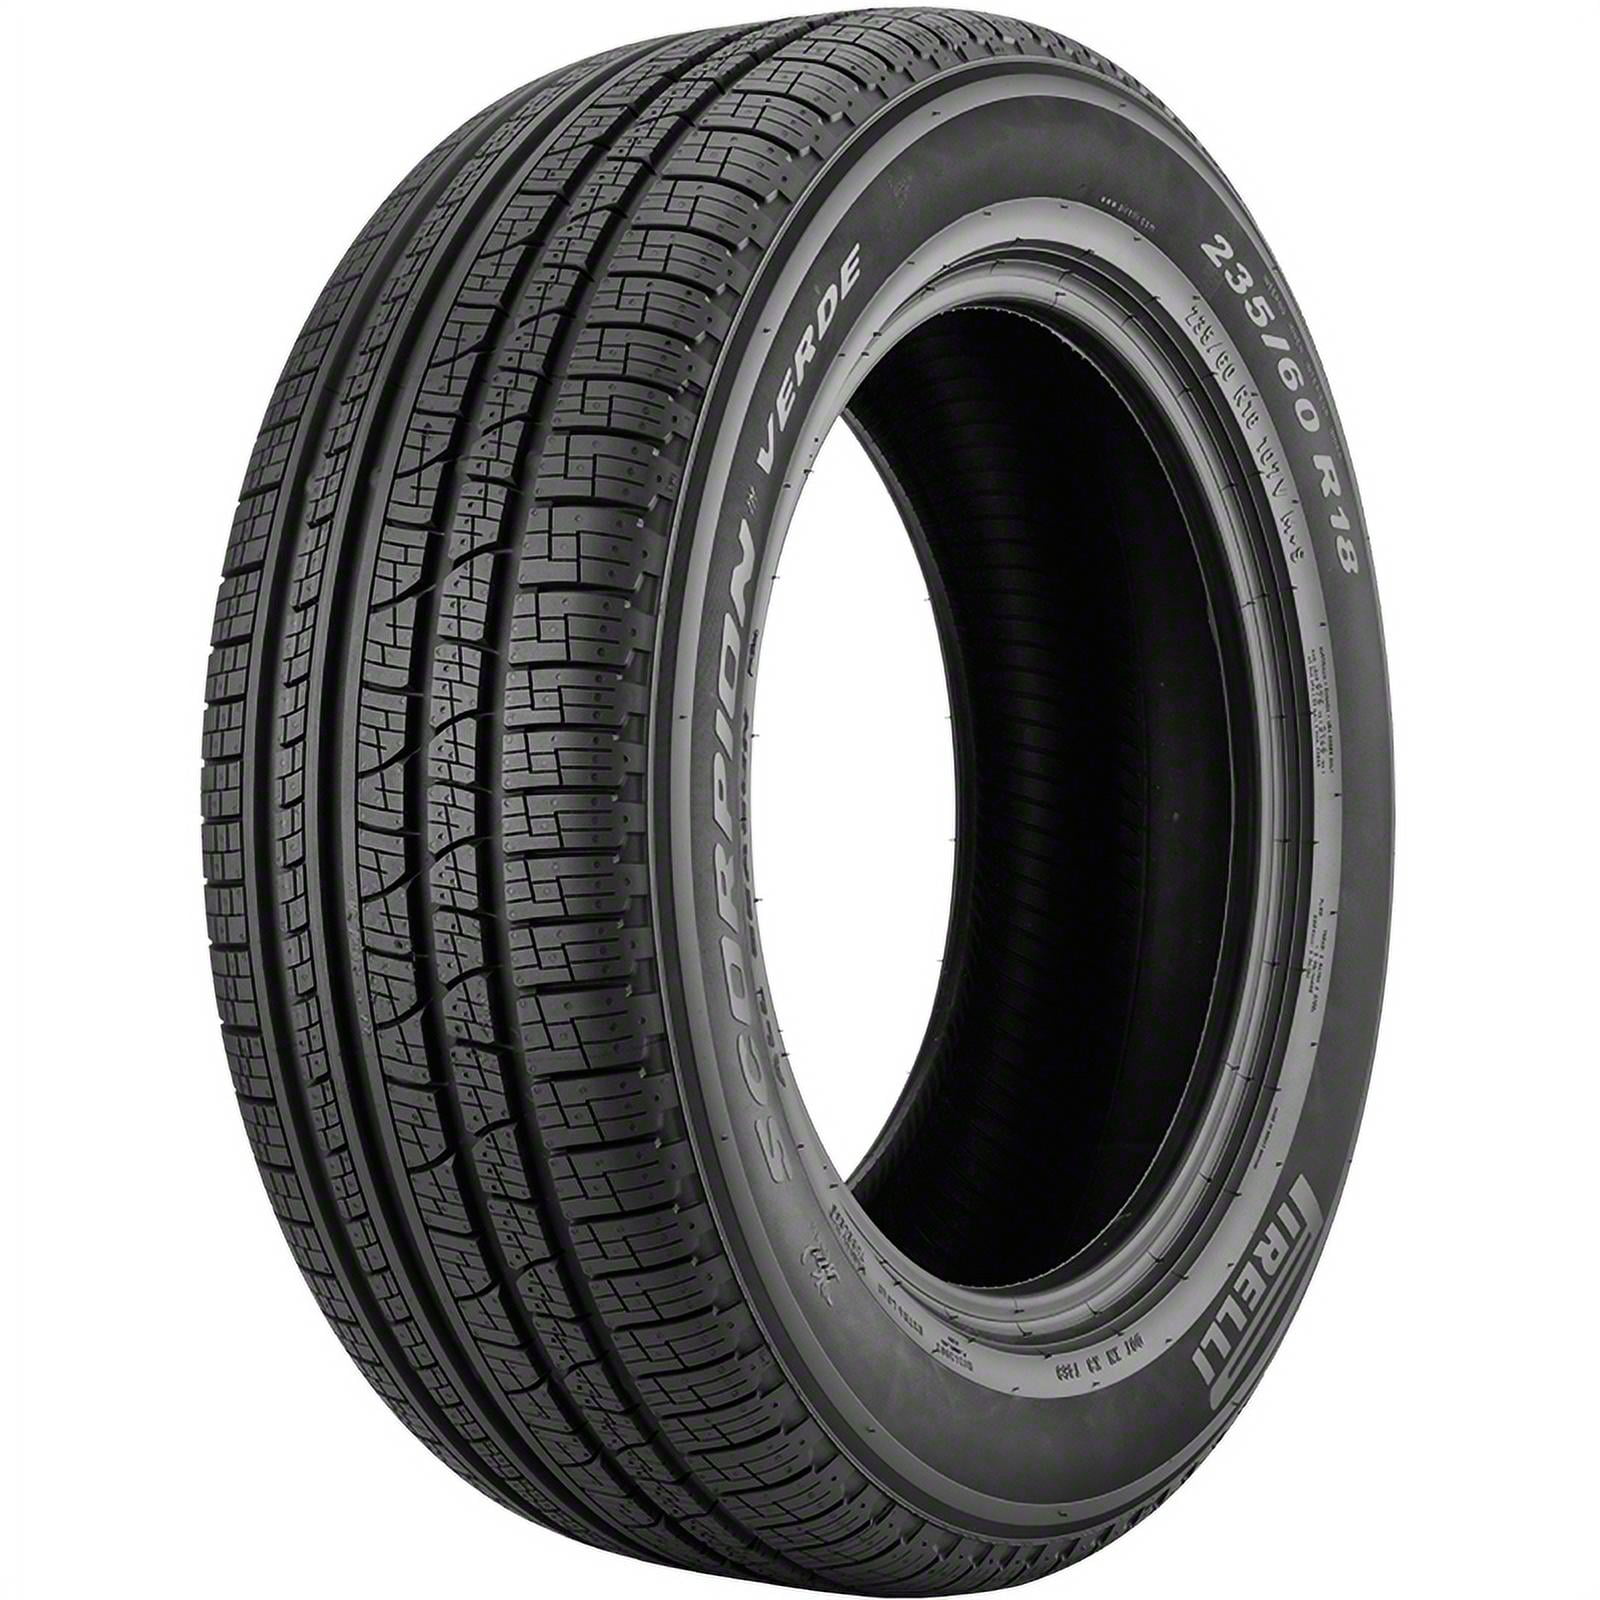 Pirelli Scorpion Zero All Season Plus 265/40R21 105 Y Tire 